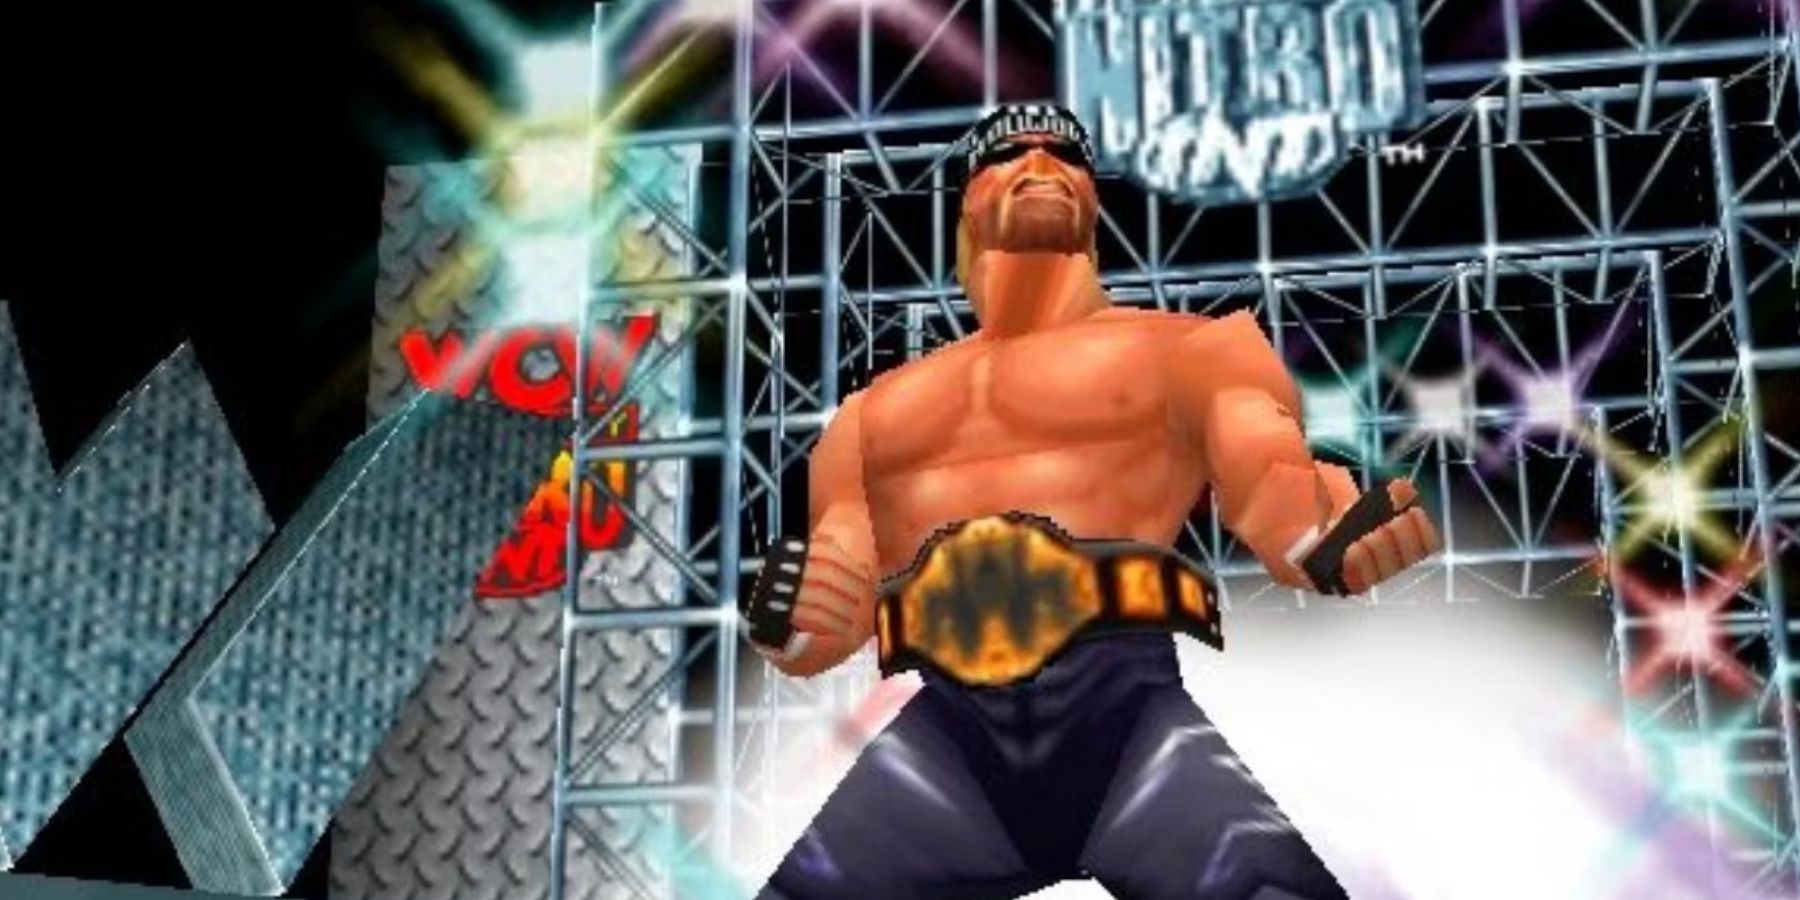 WCW vs NWO Revenge - Hollywood Hogan's entrance